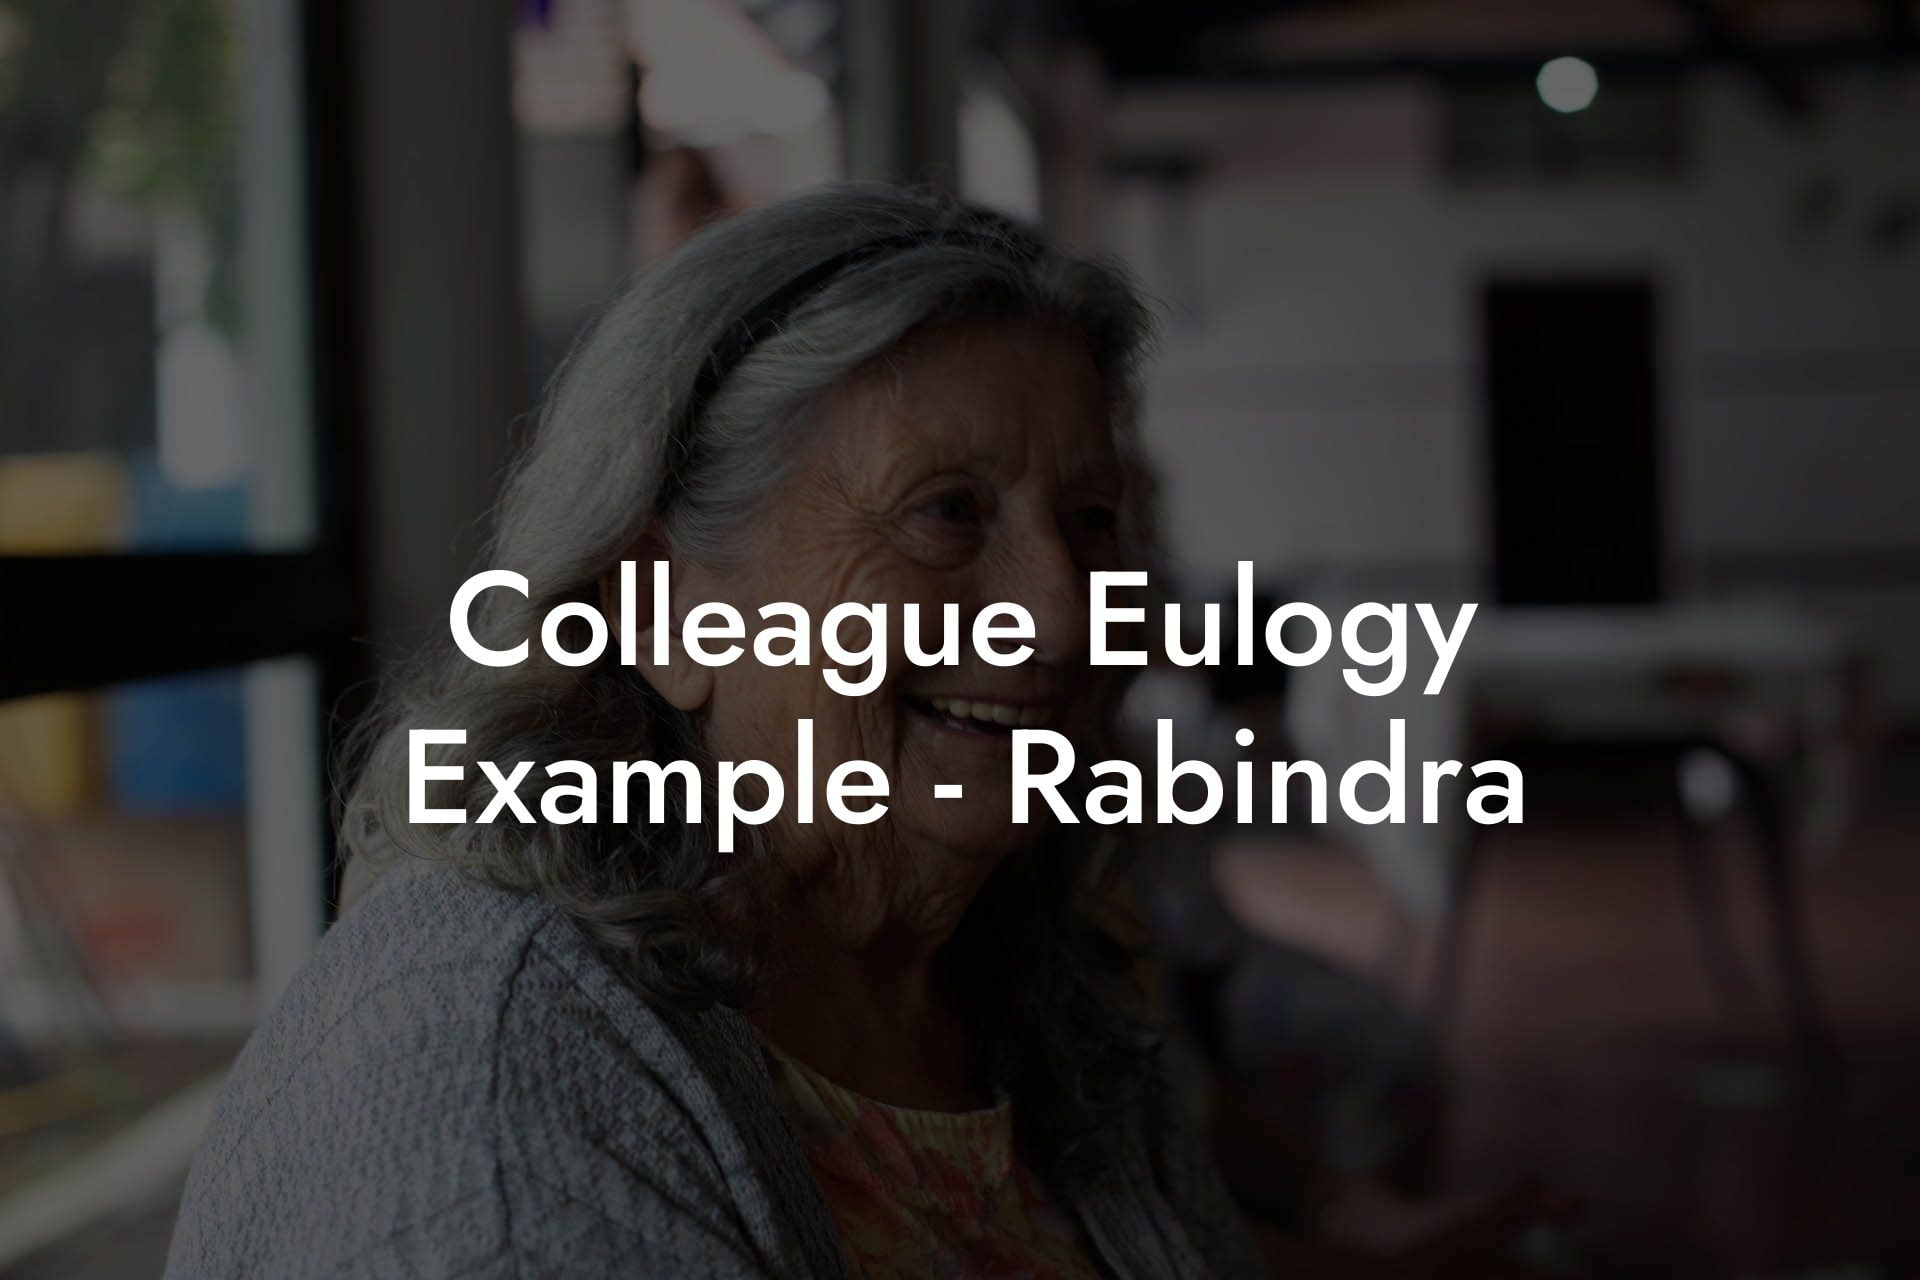 Colleague Eulogy Example - Rabindra